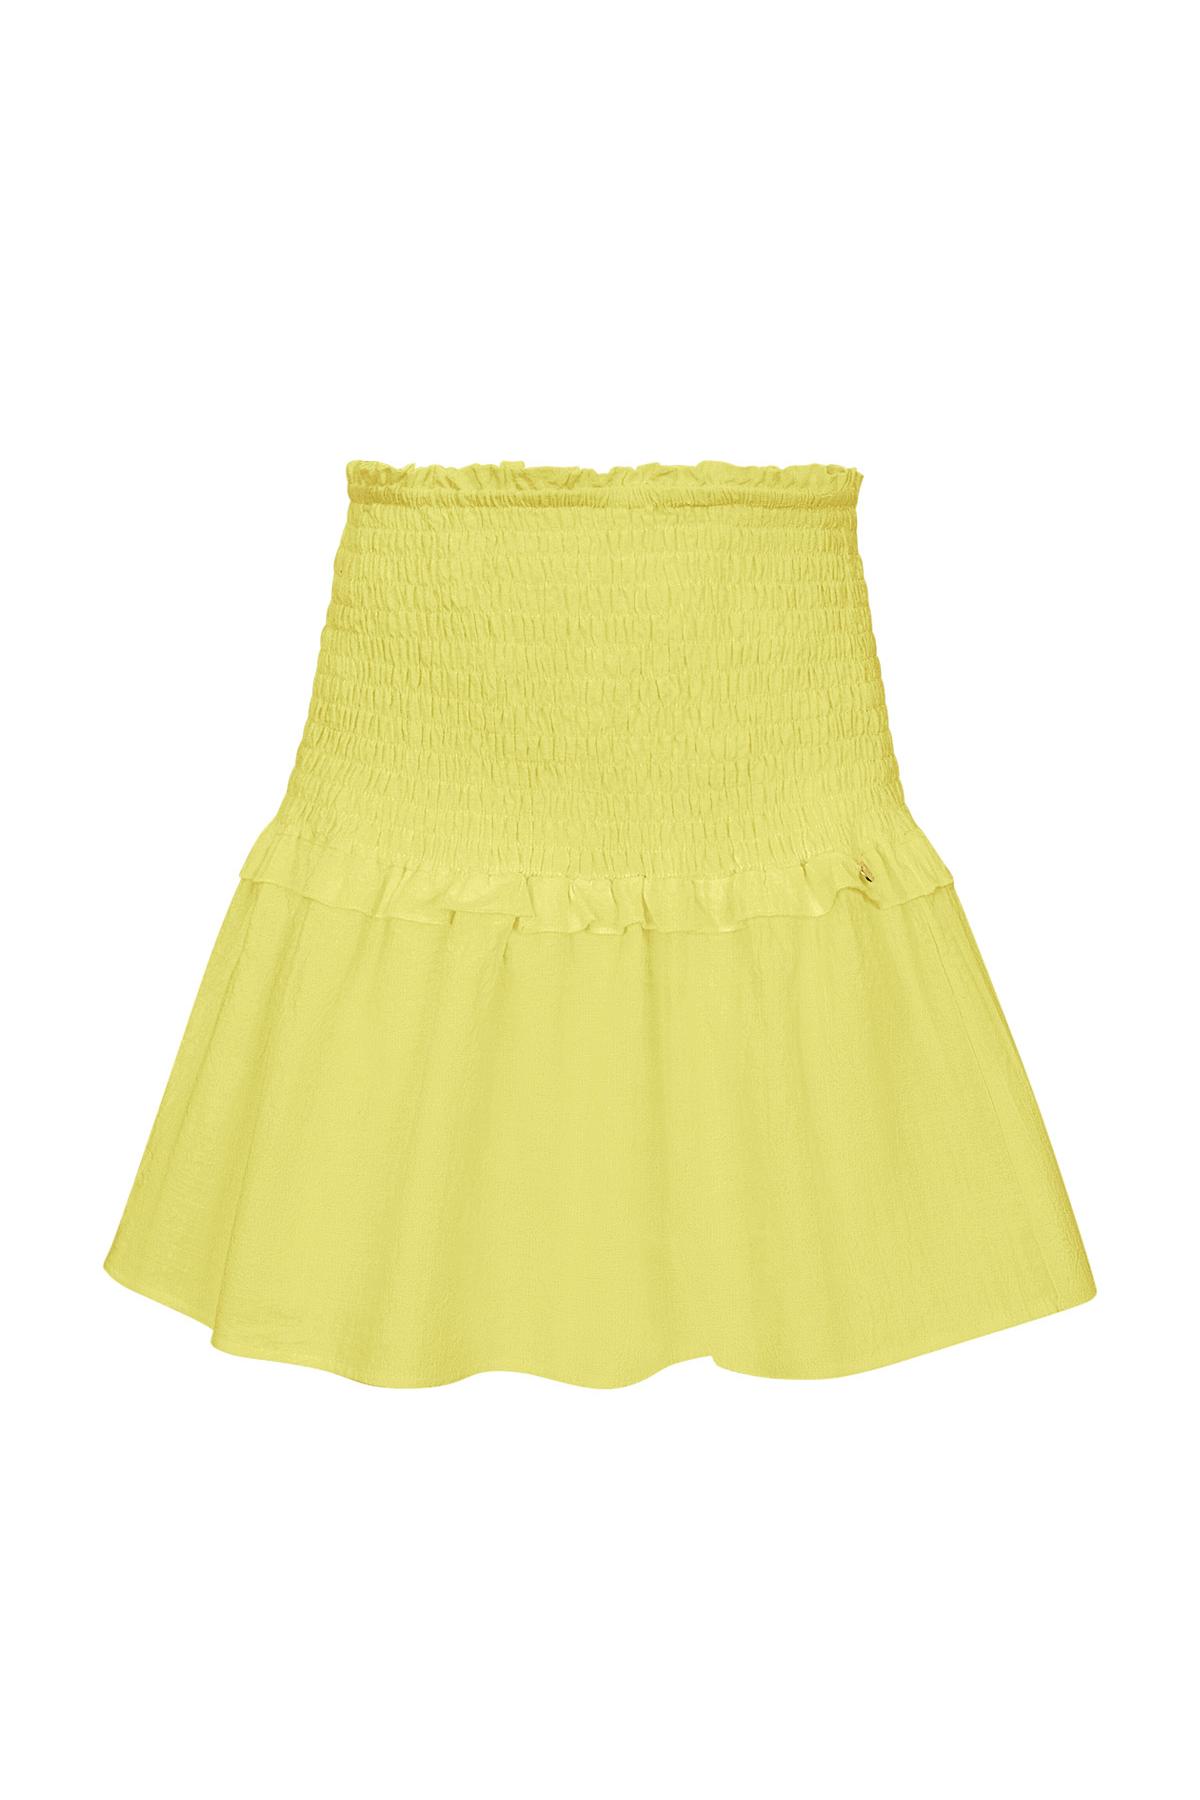 Skirt smock detail - yellow S h5 